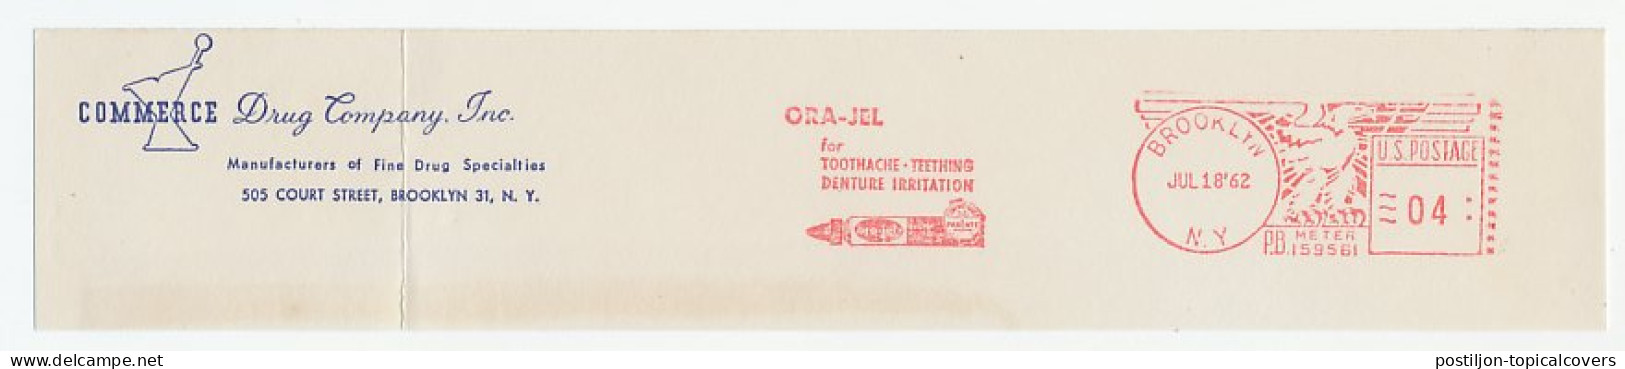 Meter Top Cut USA 1962 Denture Irritation - Ora Jel - Medizin